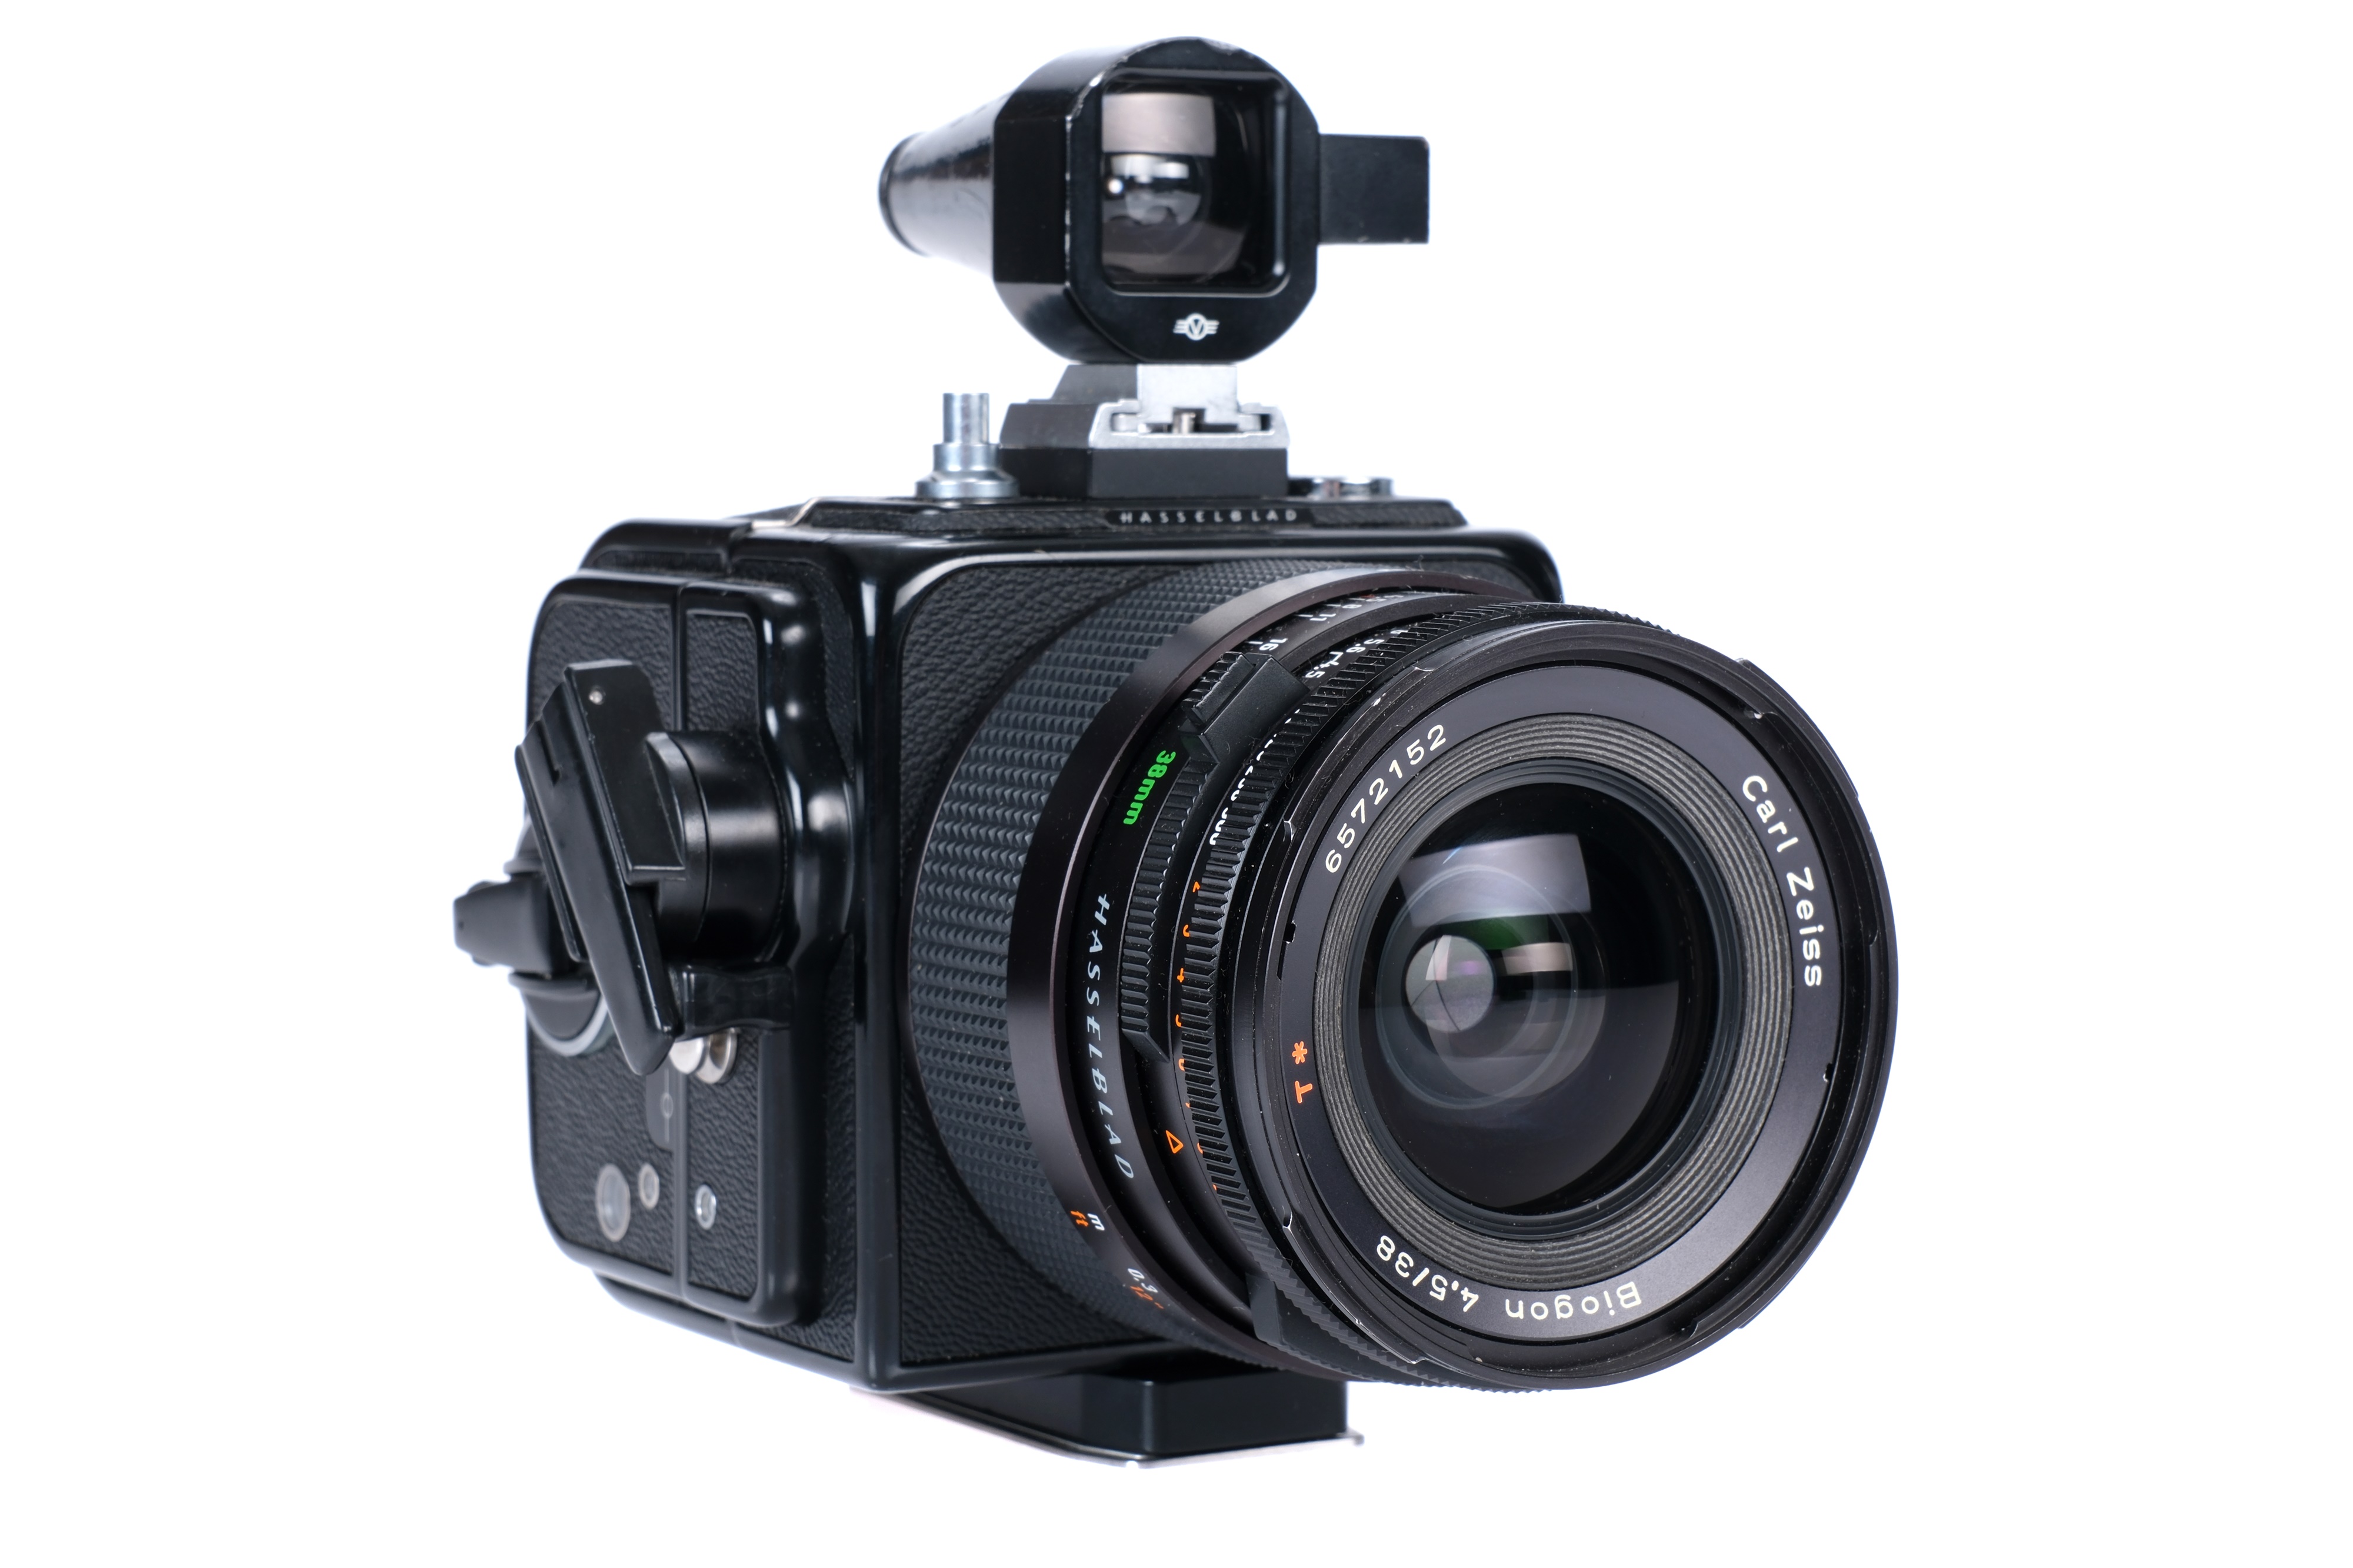 A Hasselblad SWC/M Medium Format Camera,